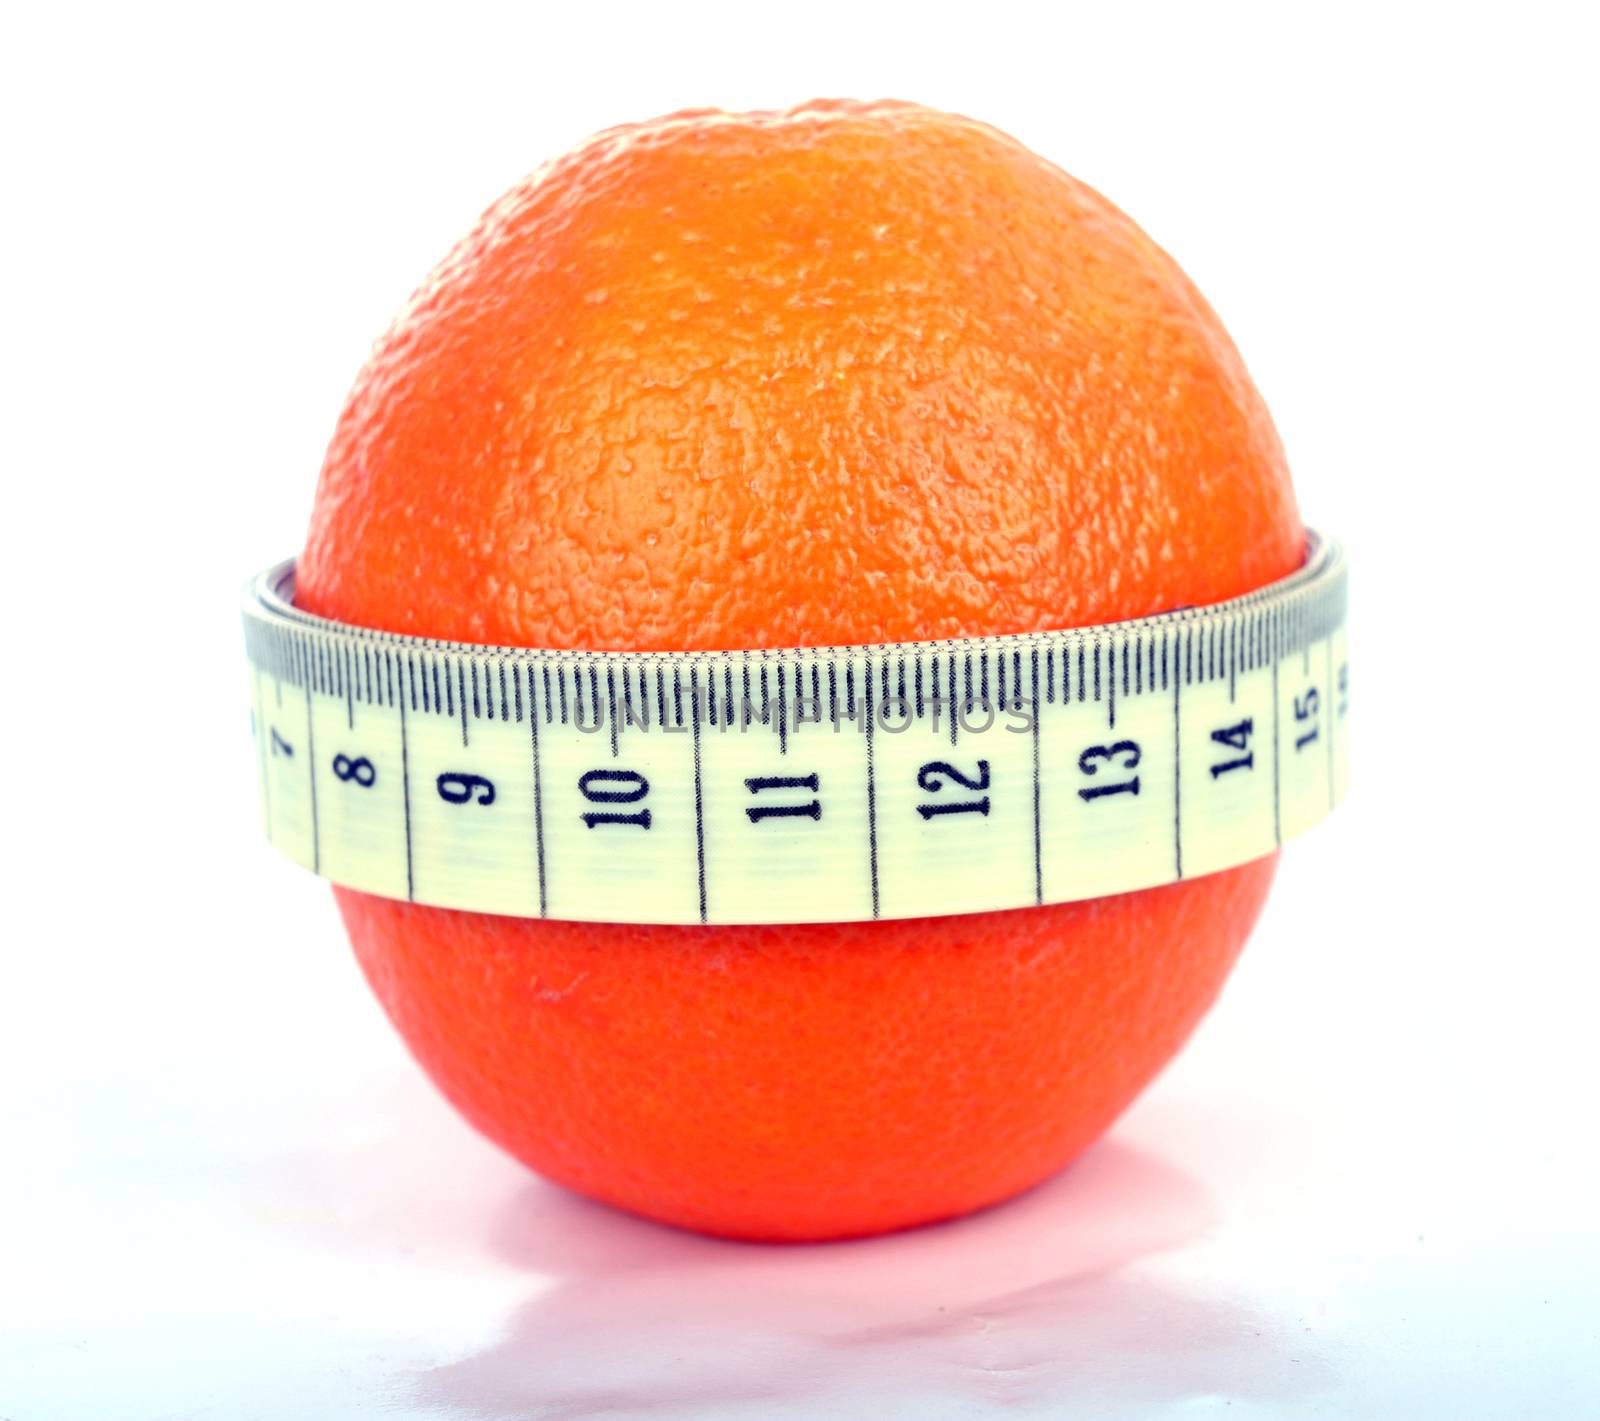 Orange with tape measure by robert_przybysz